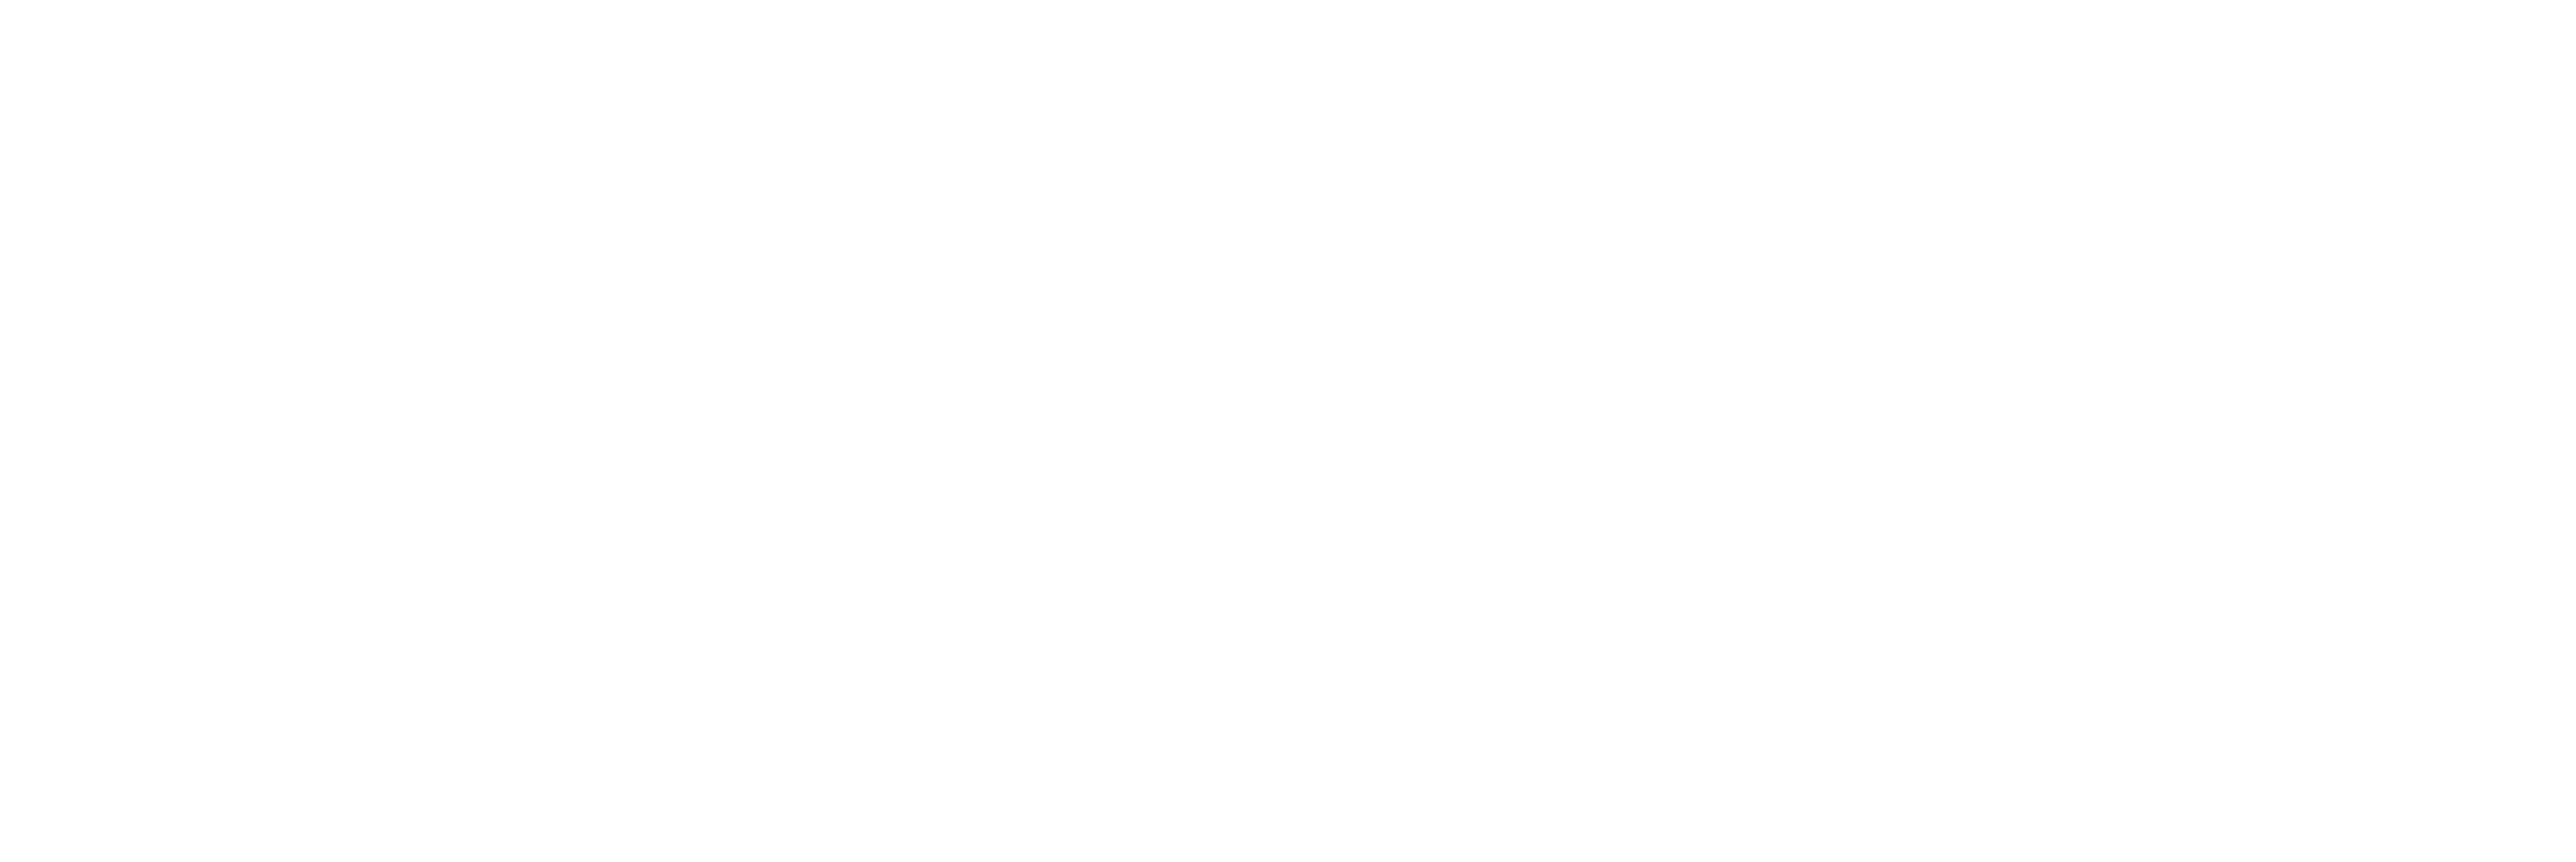 Rawat Technologies